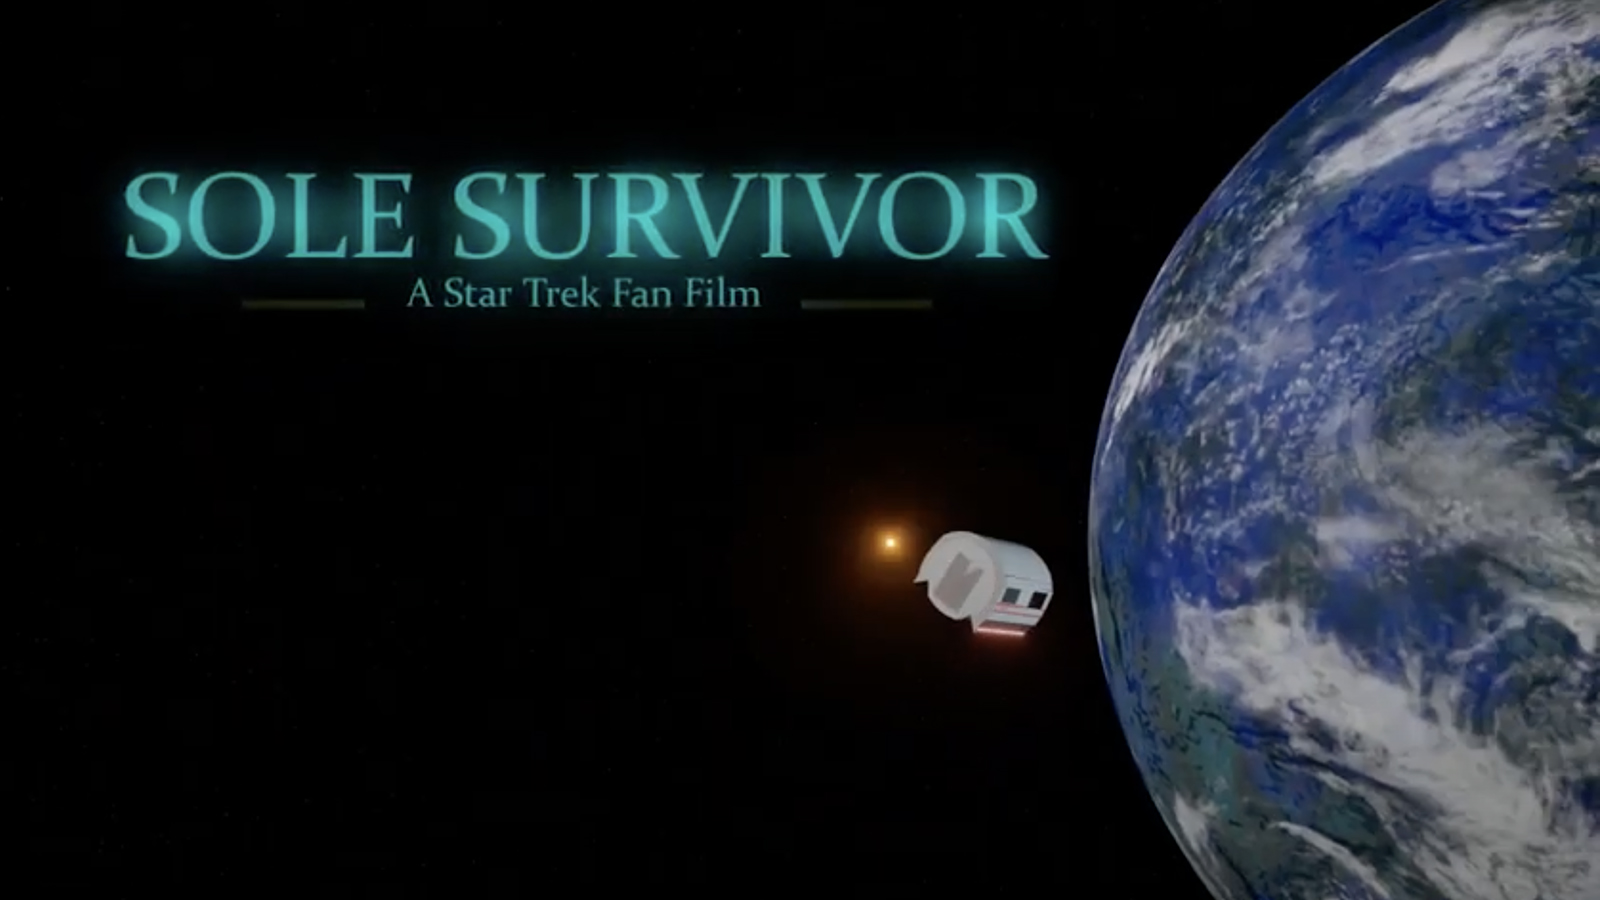 SOLE SURVIVOR is a “one-man show” Star Trek fan film! (interview with STEVE INGLIS)